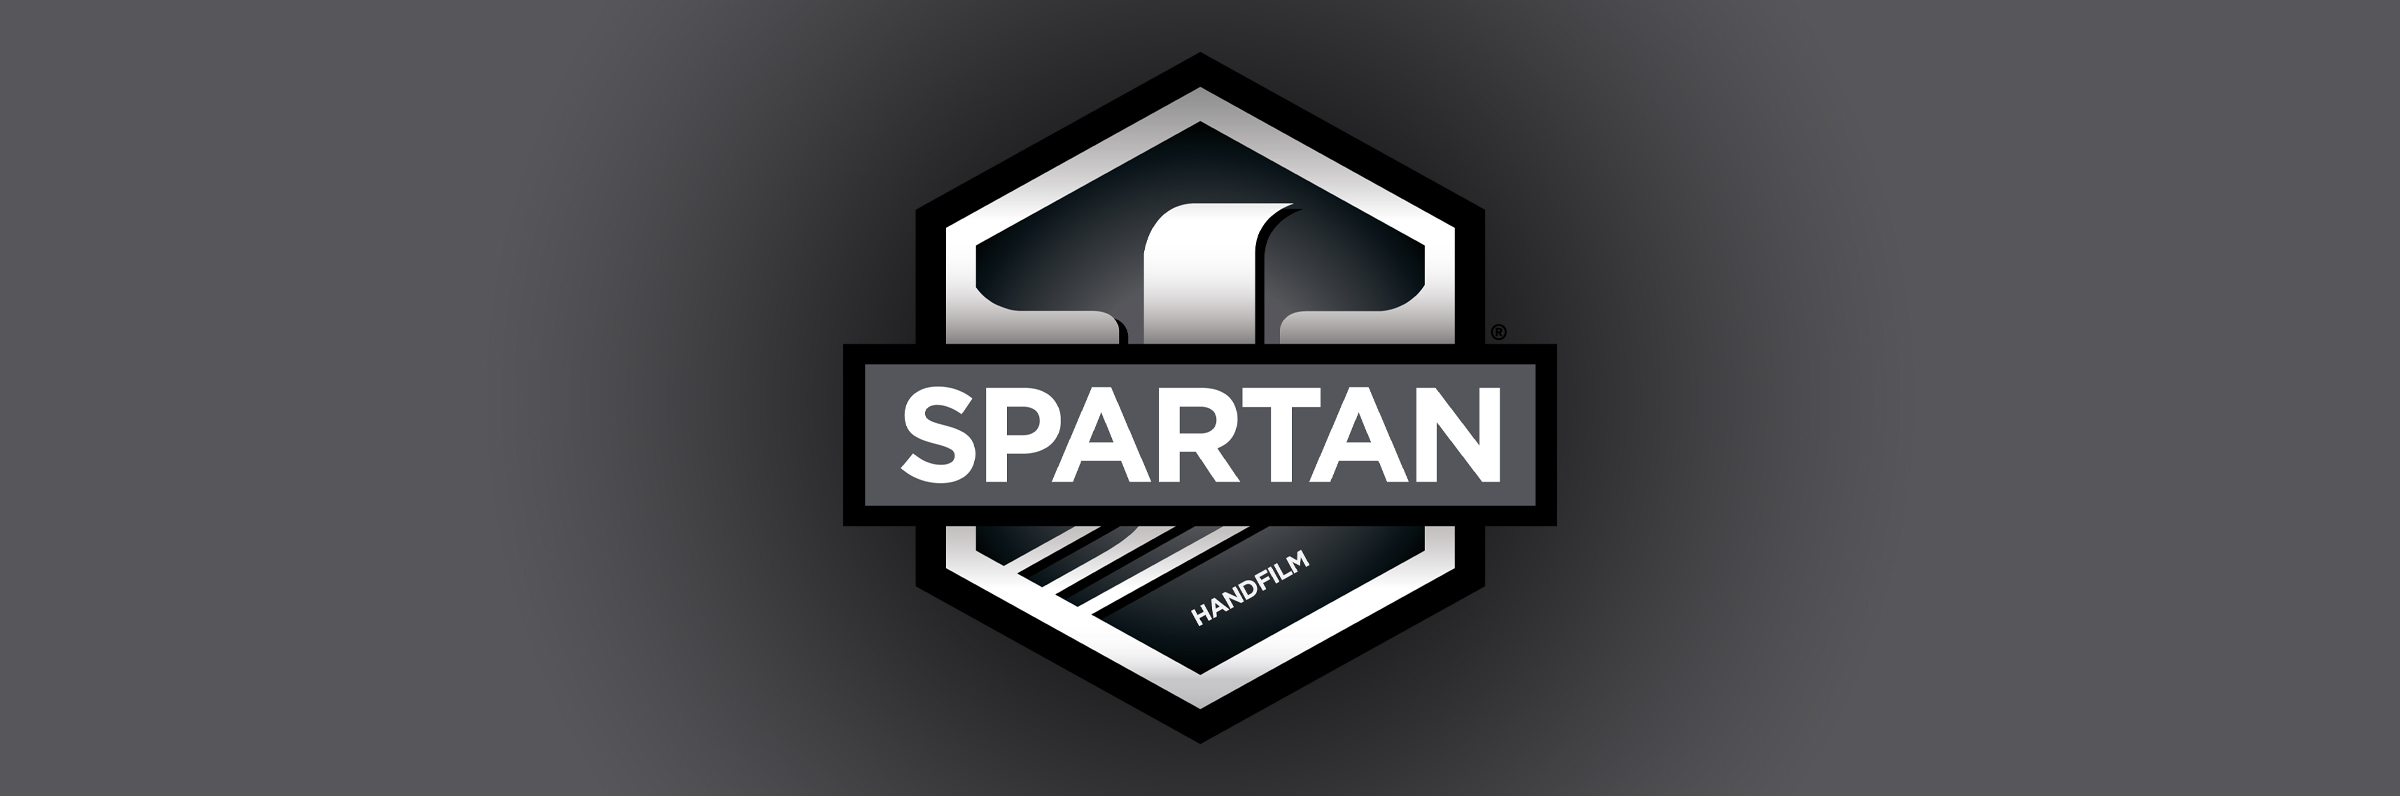 Spartan-LP-Hero